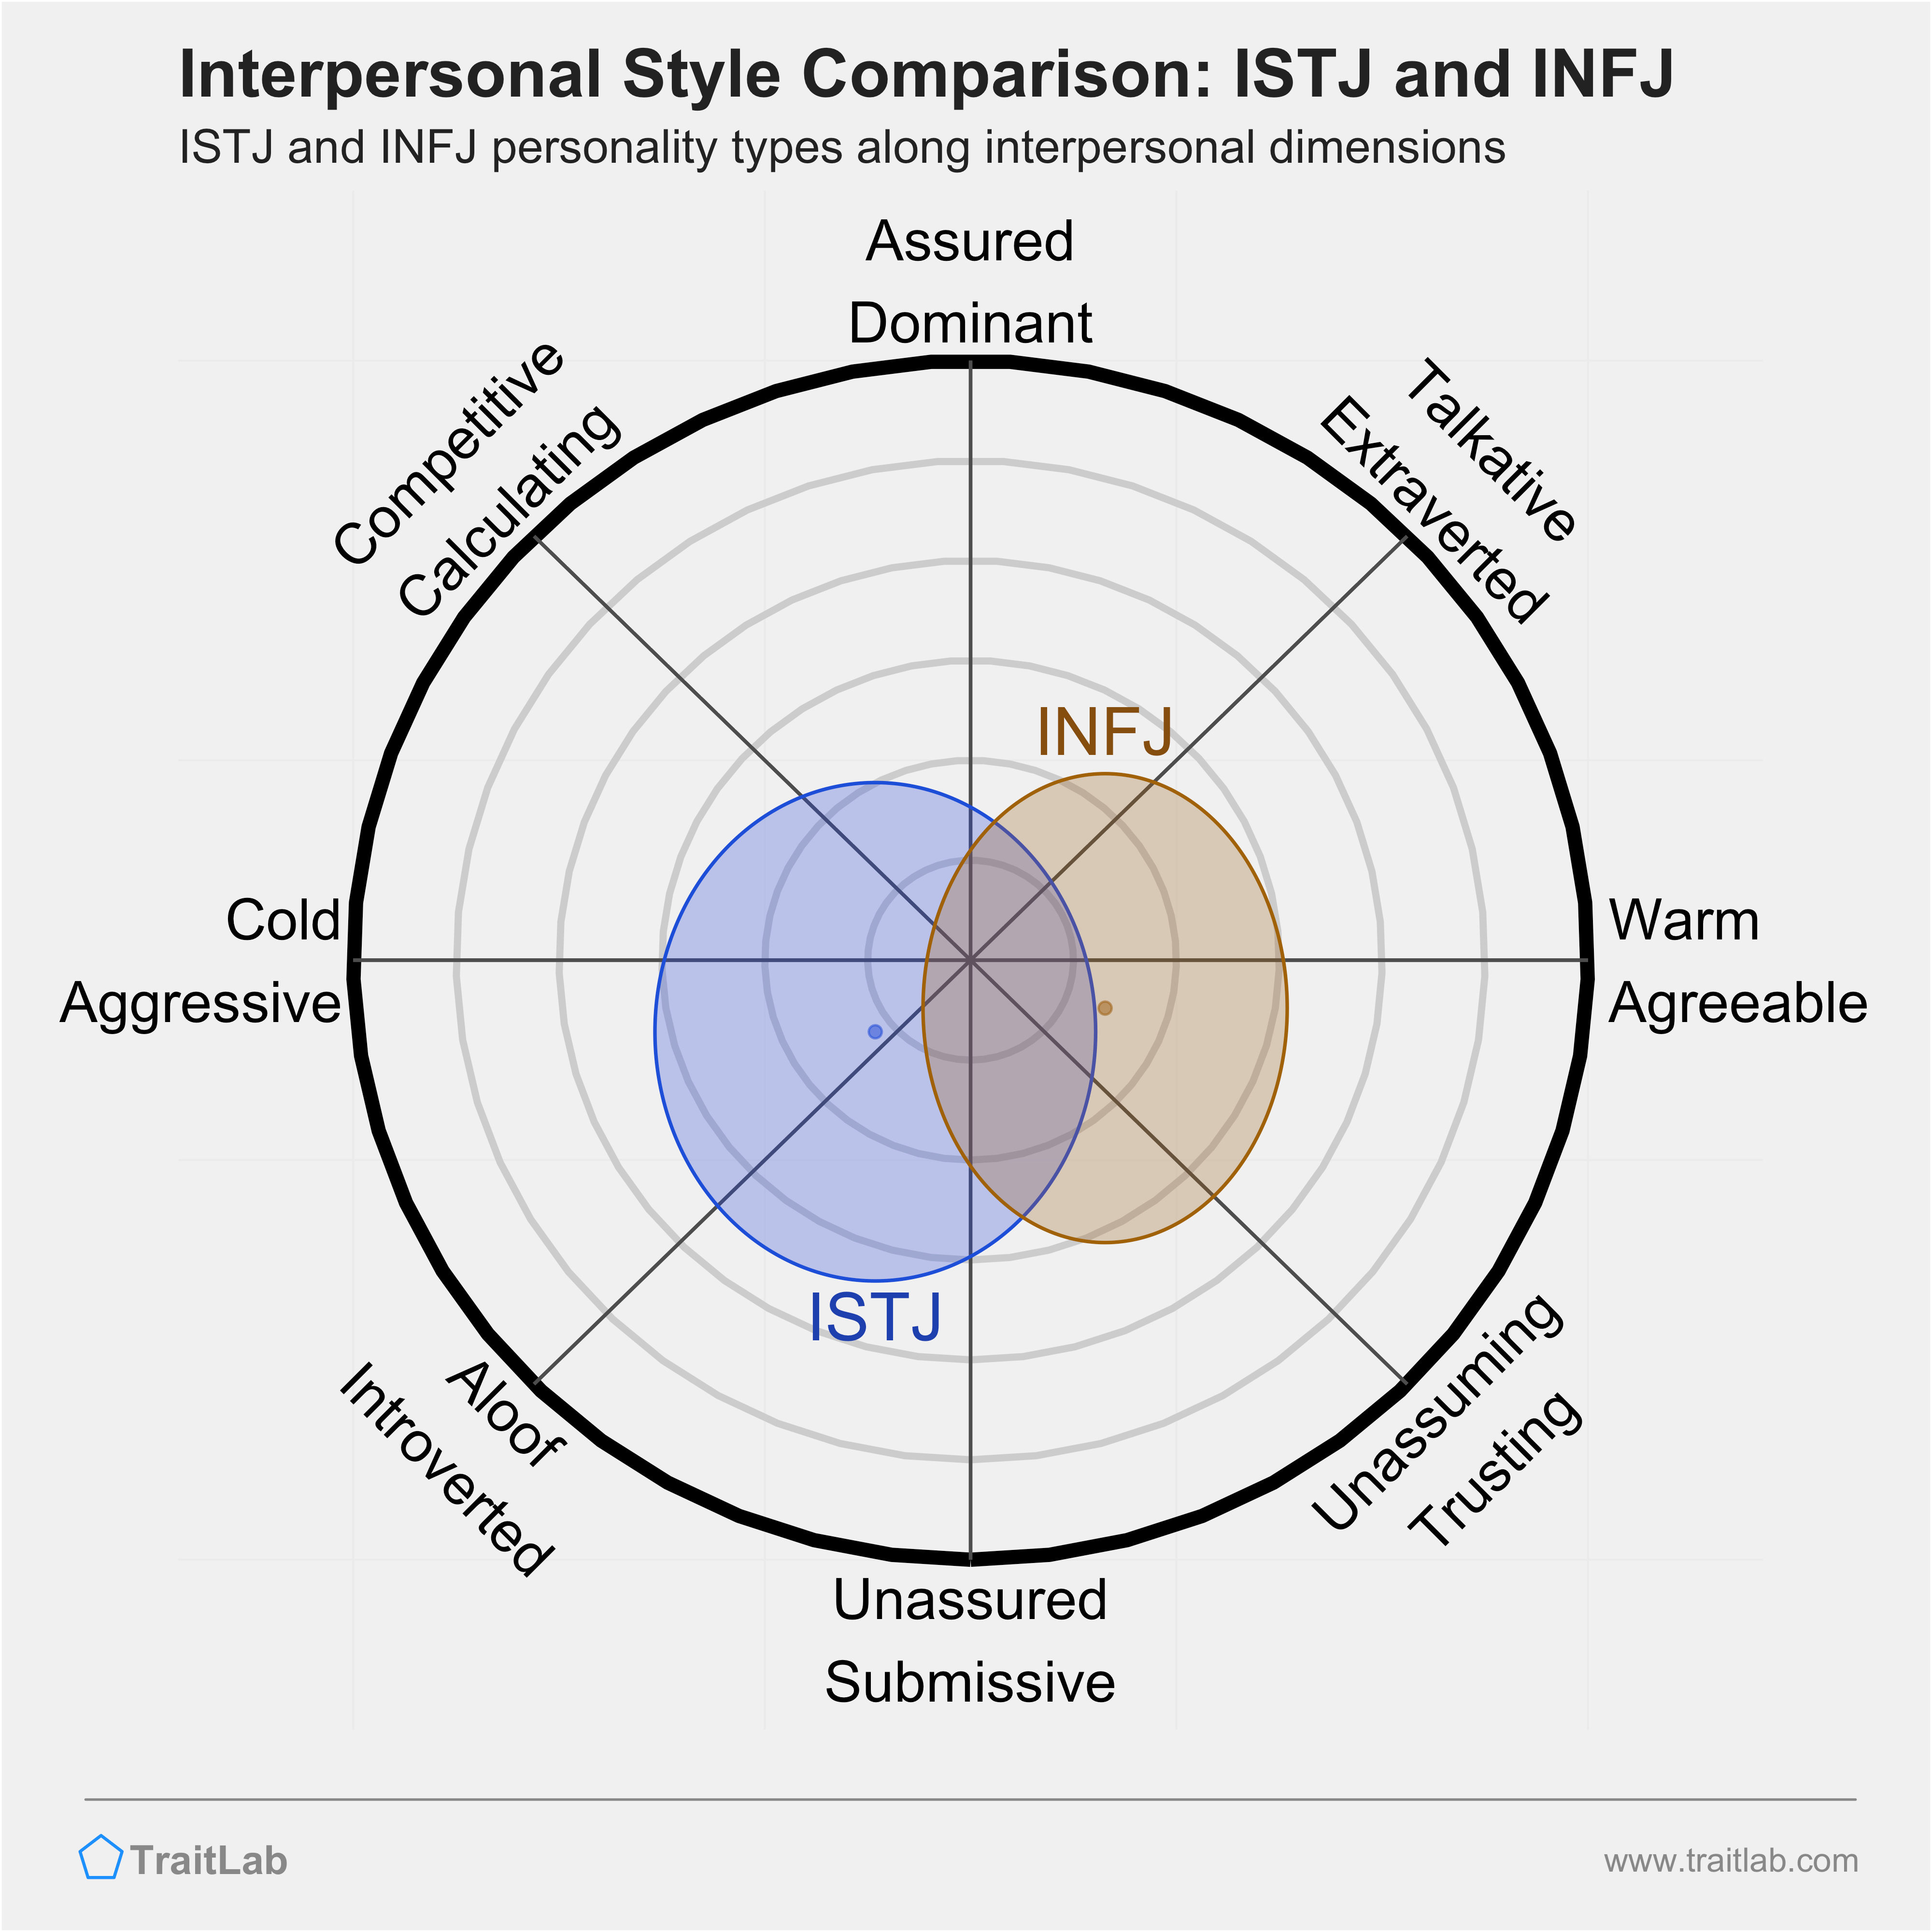 ISTJ and INFJ comparison across interpersonal dimensions